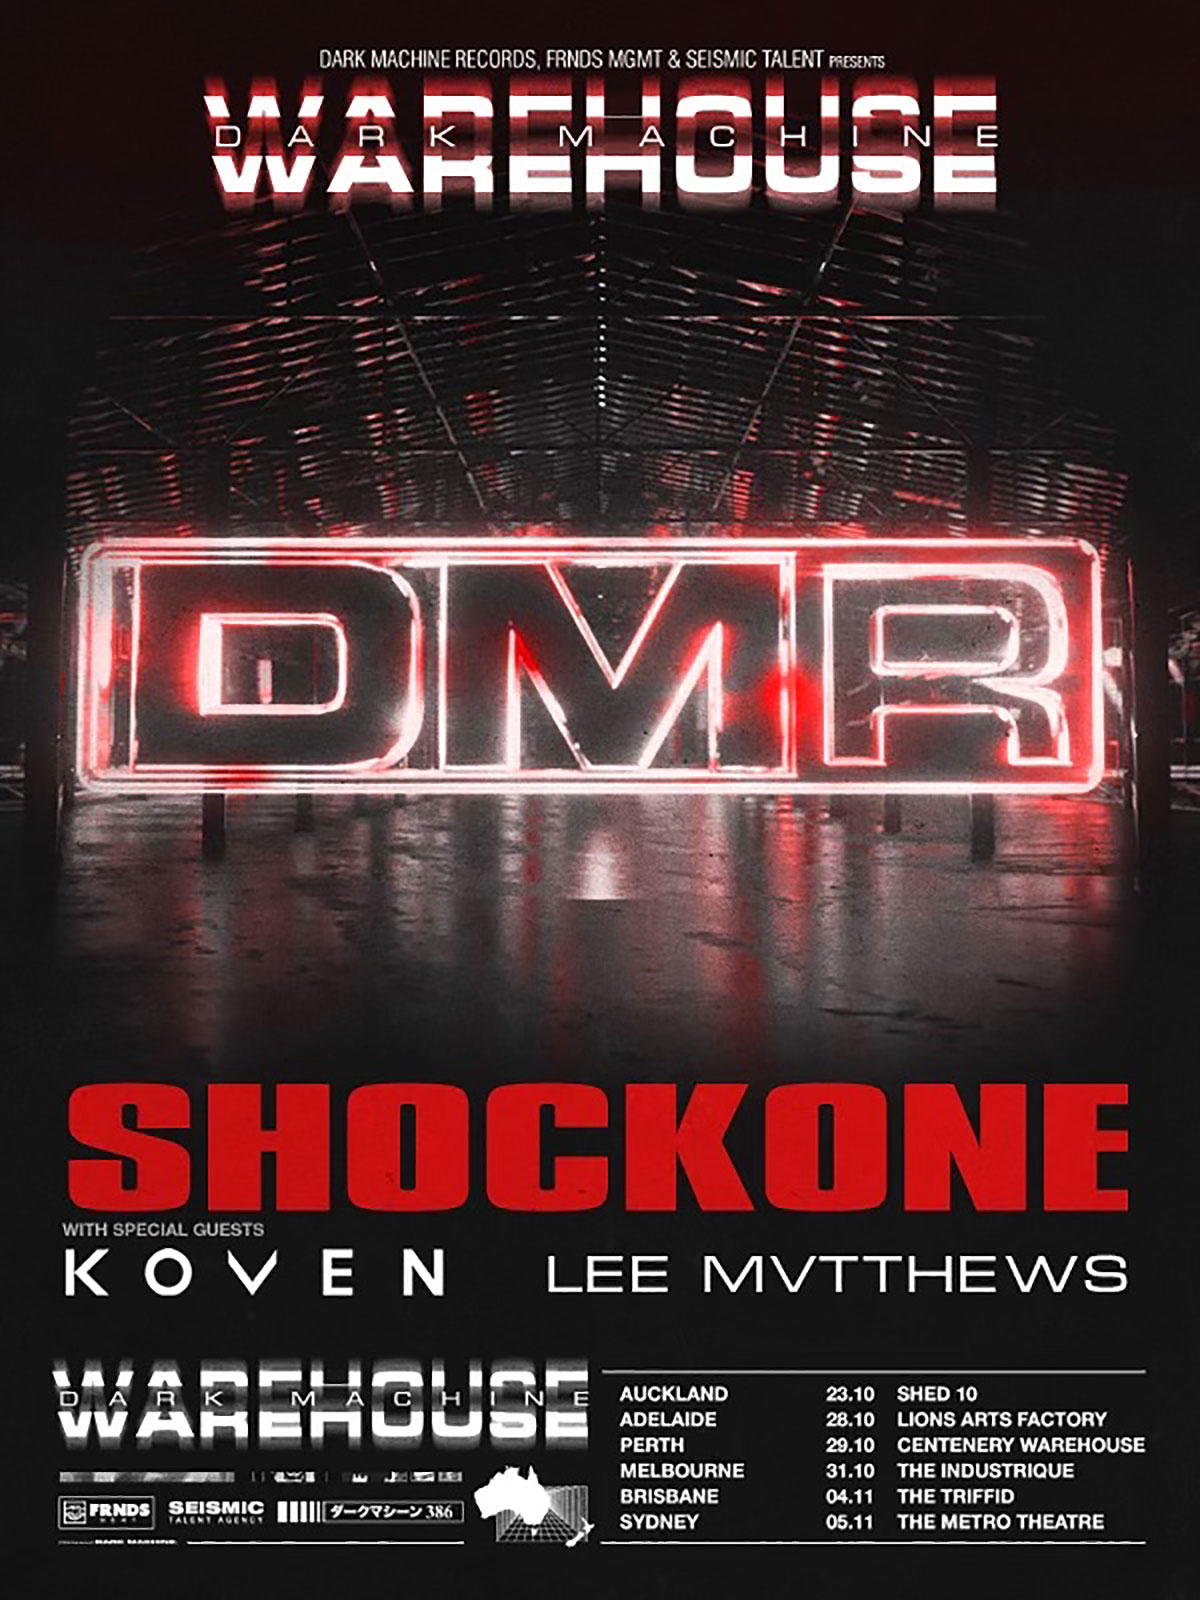 shockone-dark-machine-records-2022-warehouse-tour-dates-poster-oz-edm